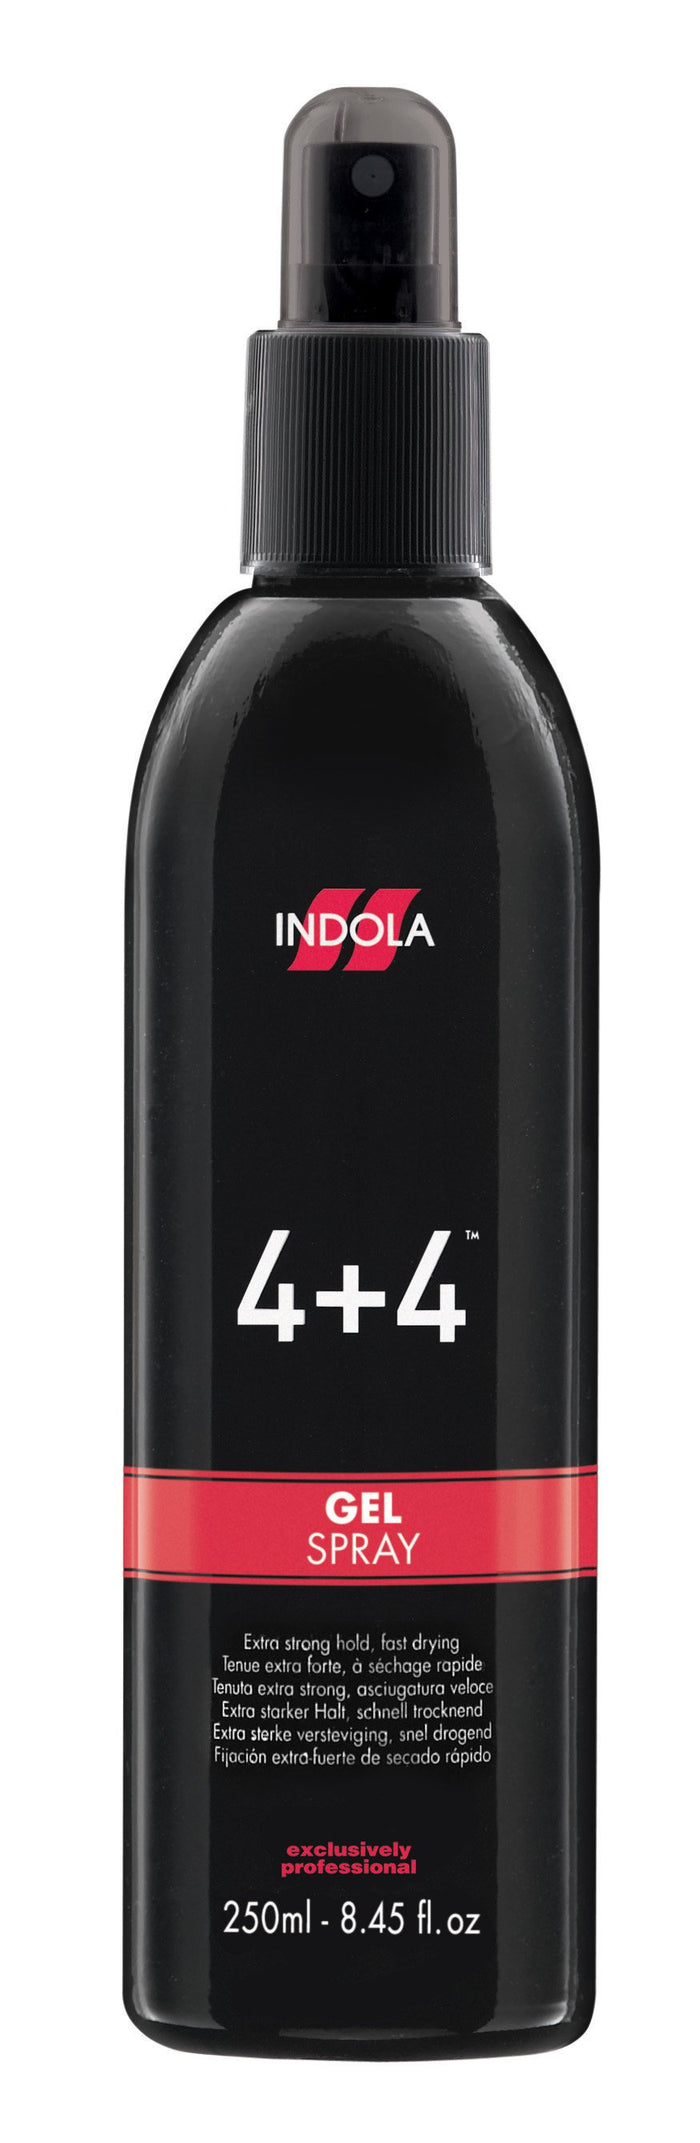 Indola 4+4 Gel Spray 250ml